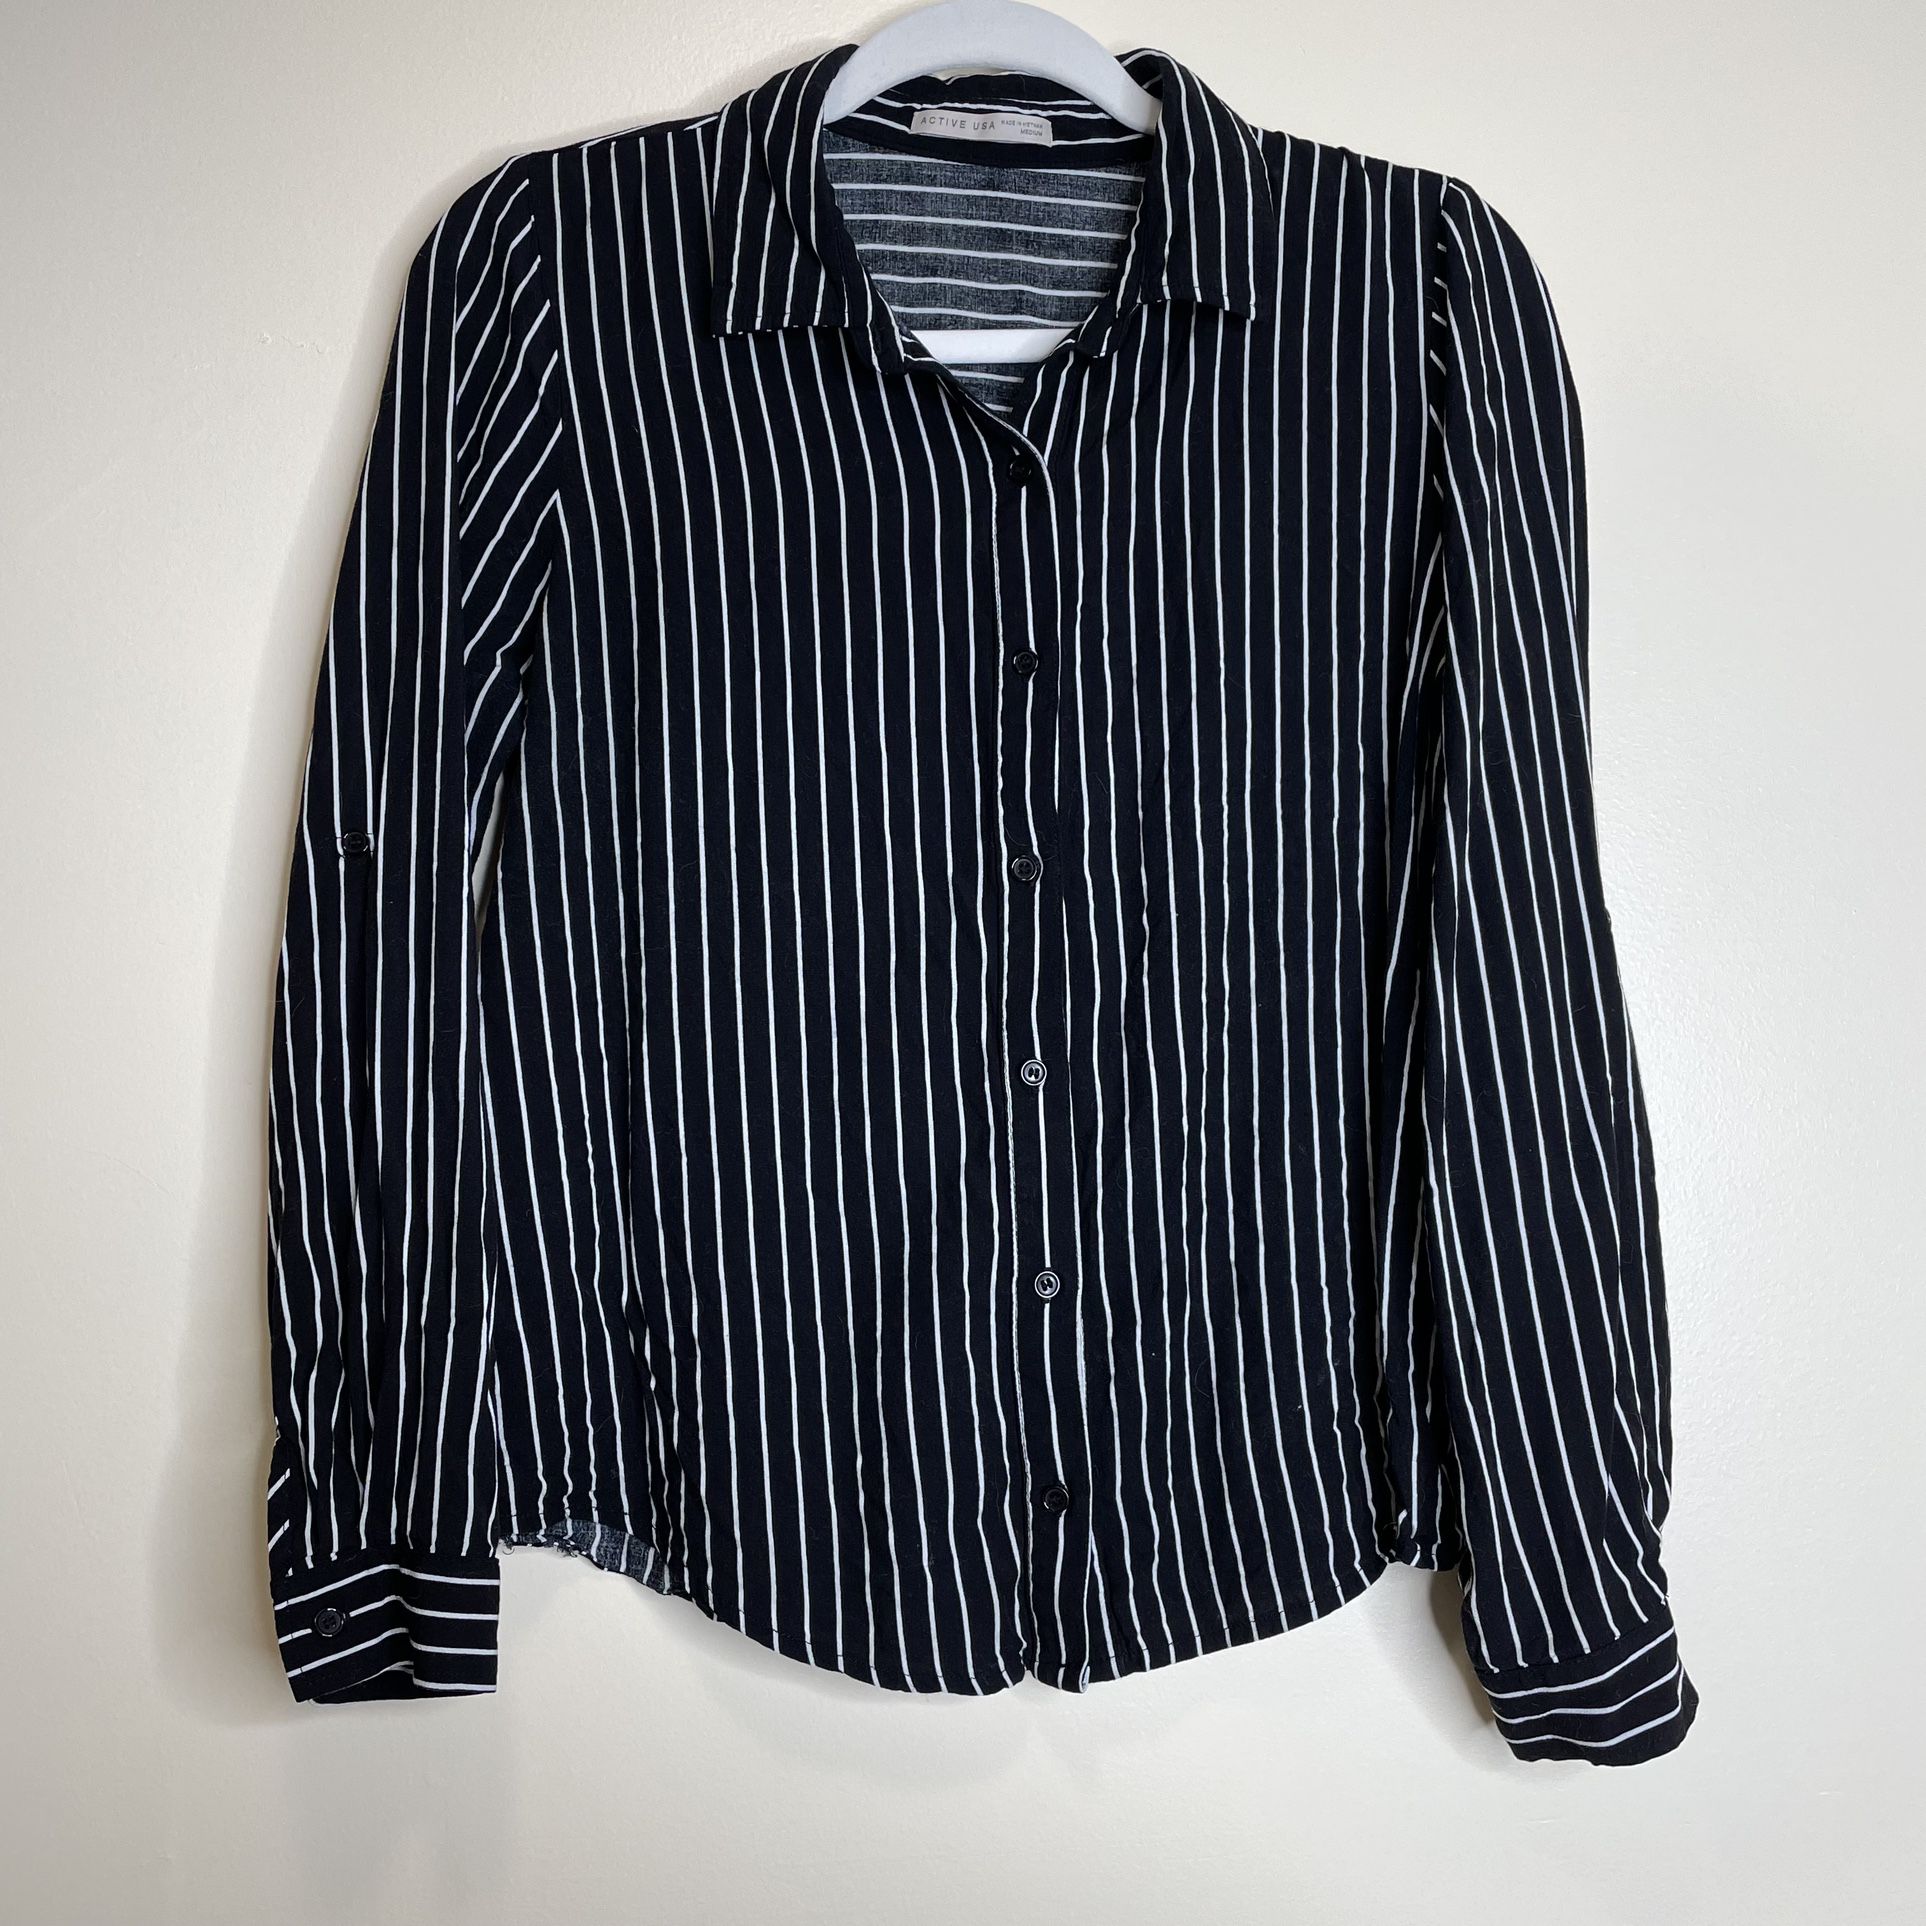 Black and White Striped Button Down Shirt Size Medium